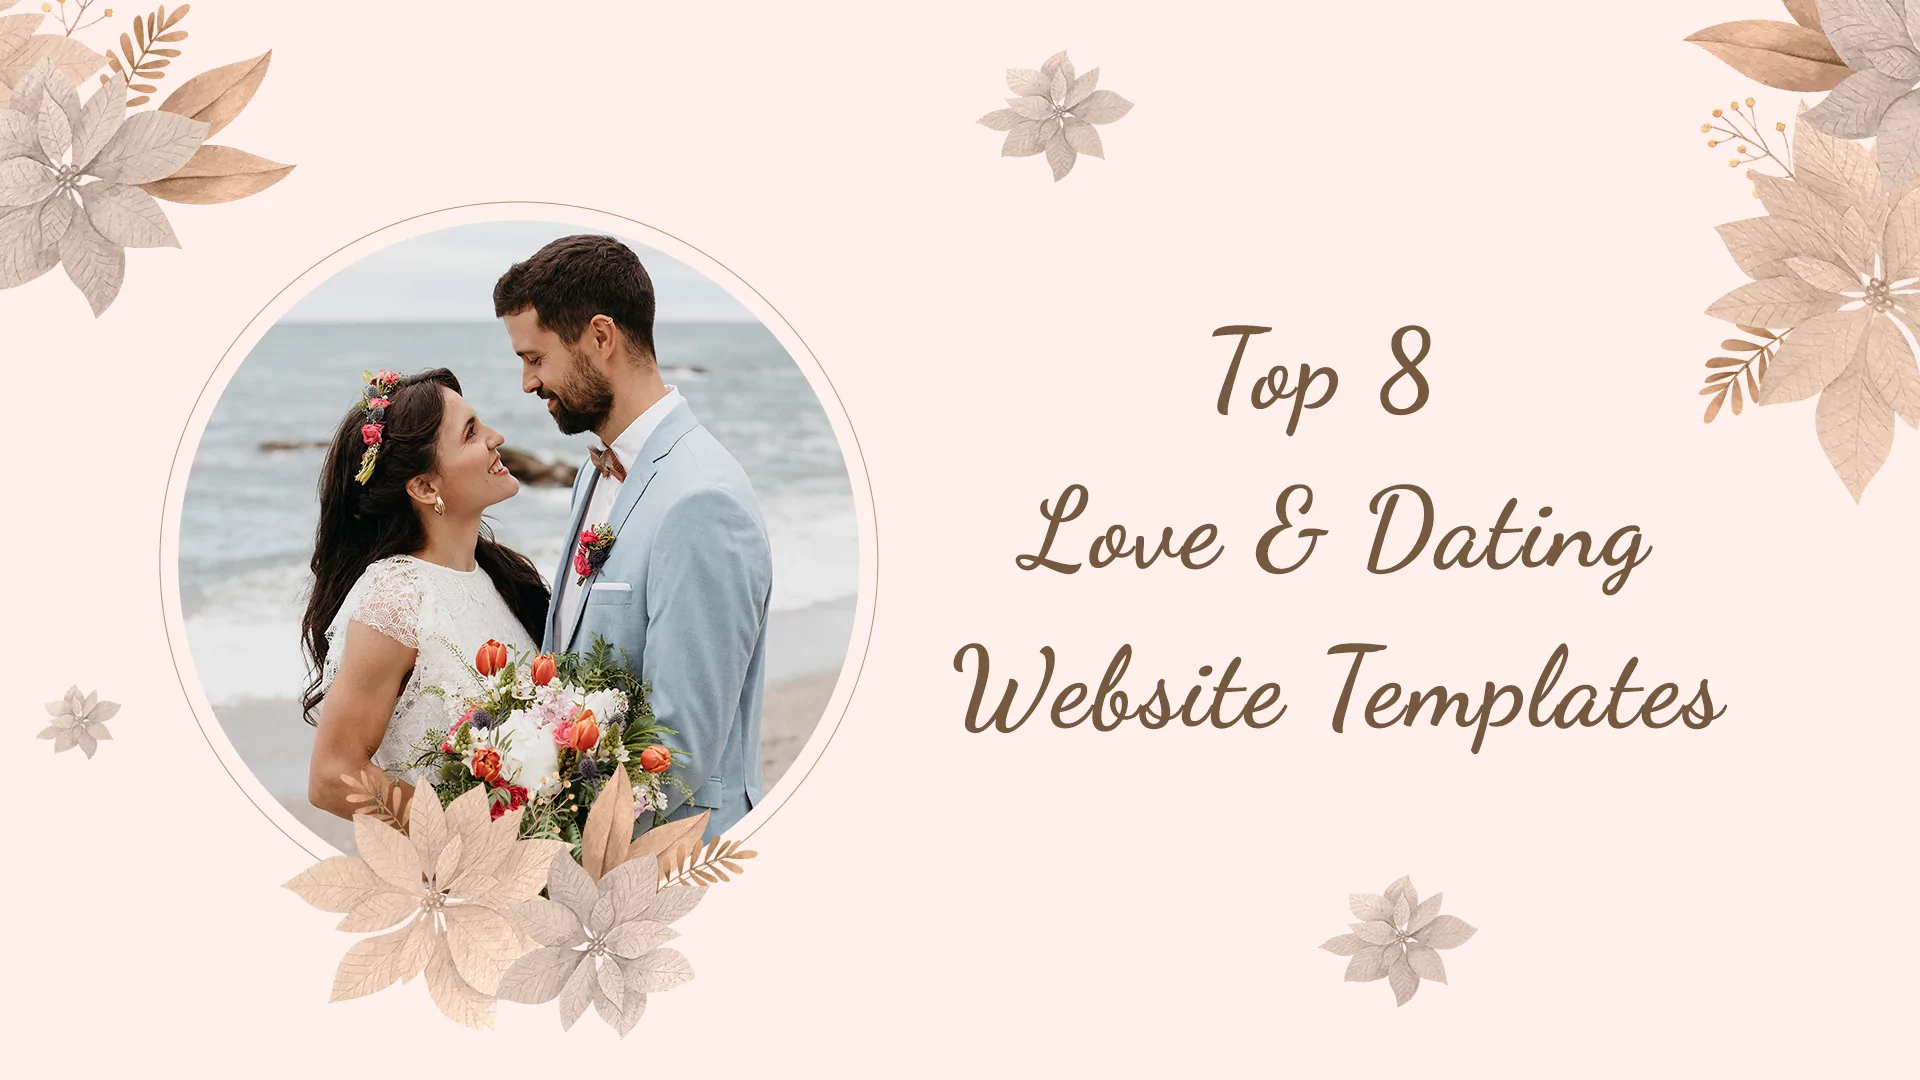 Top 8 Love & Dating Website Templates in 2022